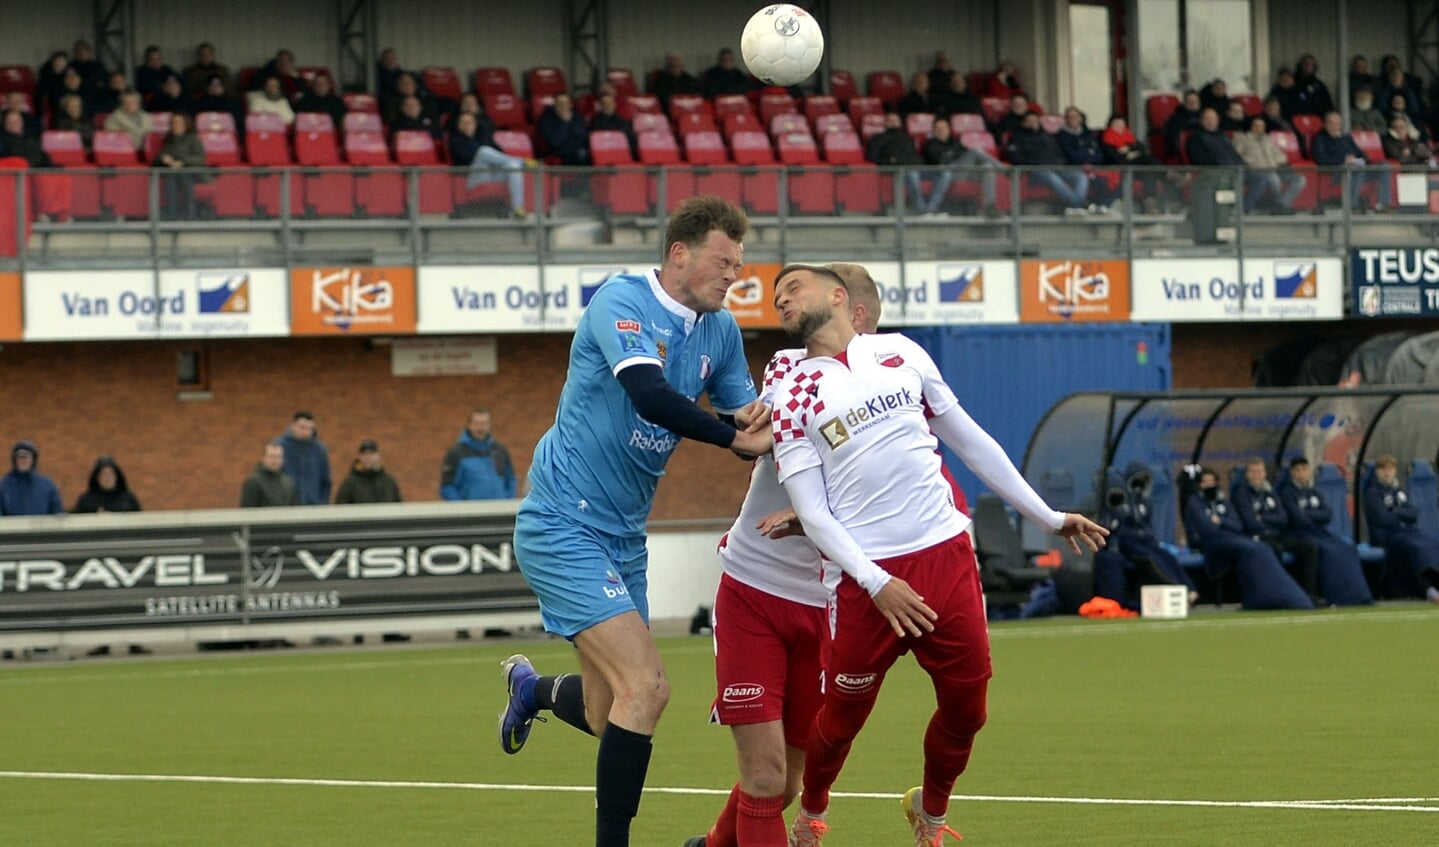 • Kozakken Boys - Excelsior Maassluis (2-3).